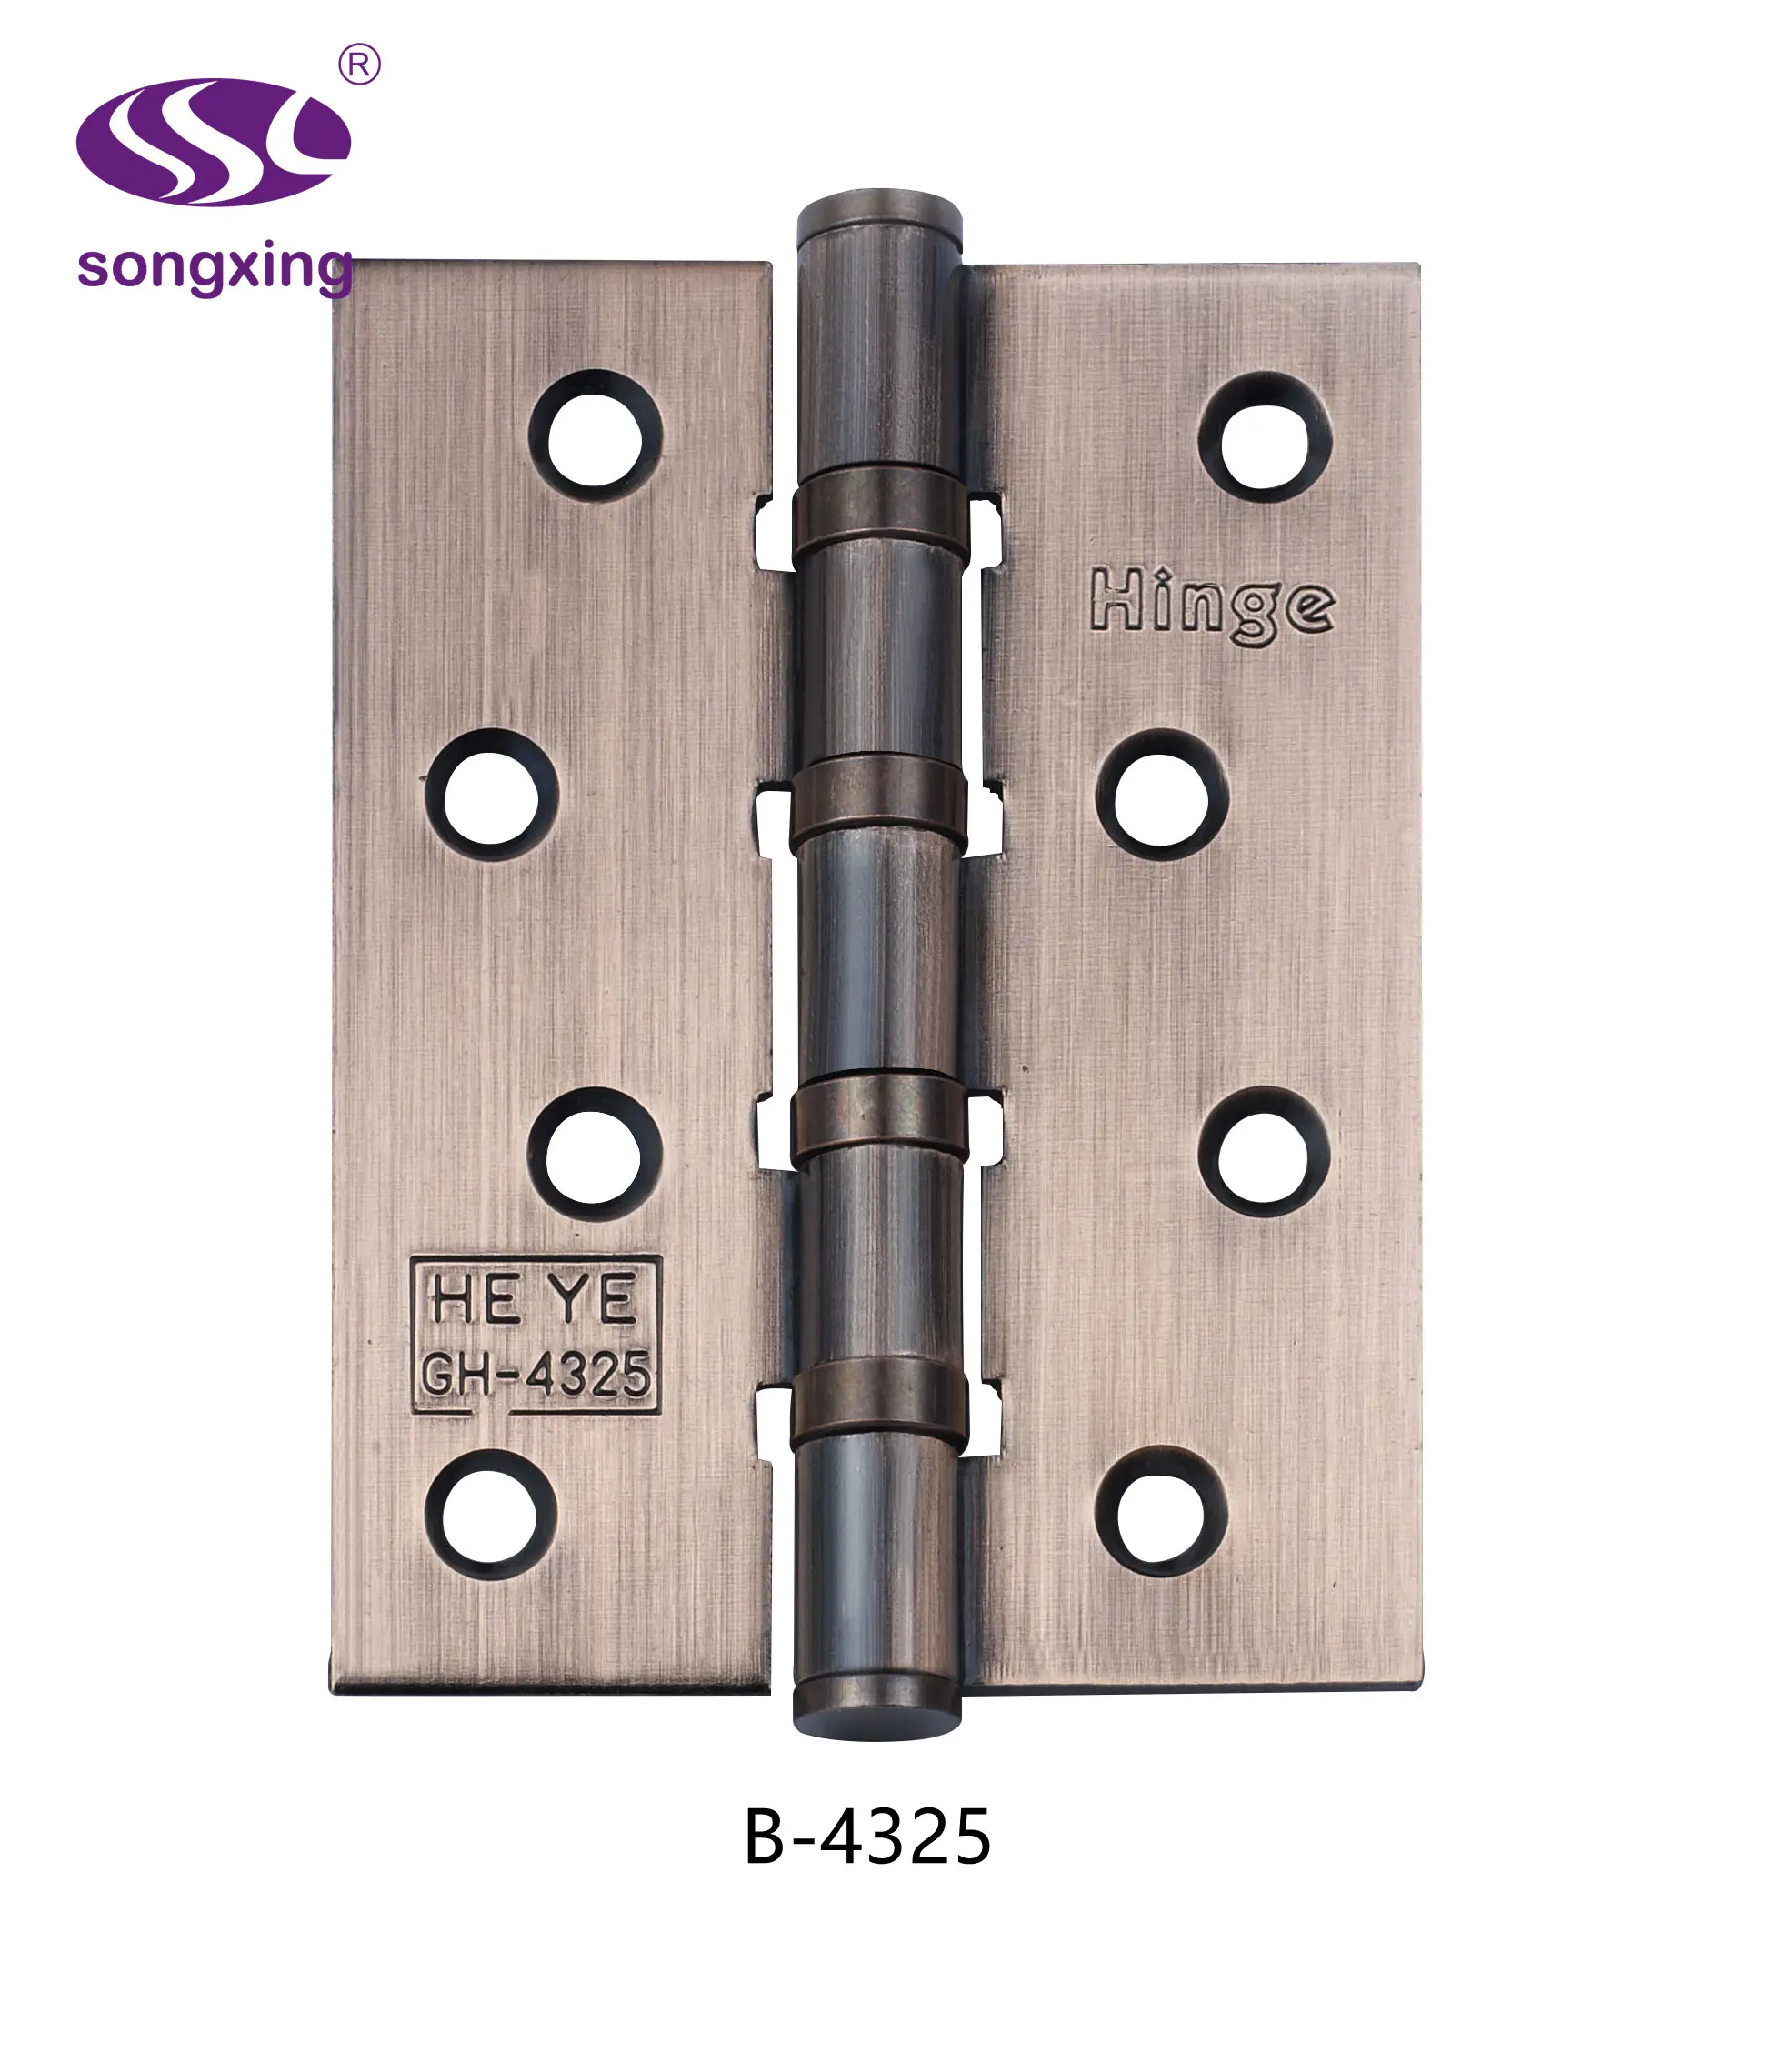 china songxing Wholesale hardware jieyang good quality heavy duty iron factory ac ball bearing door hinge